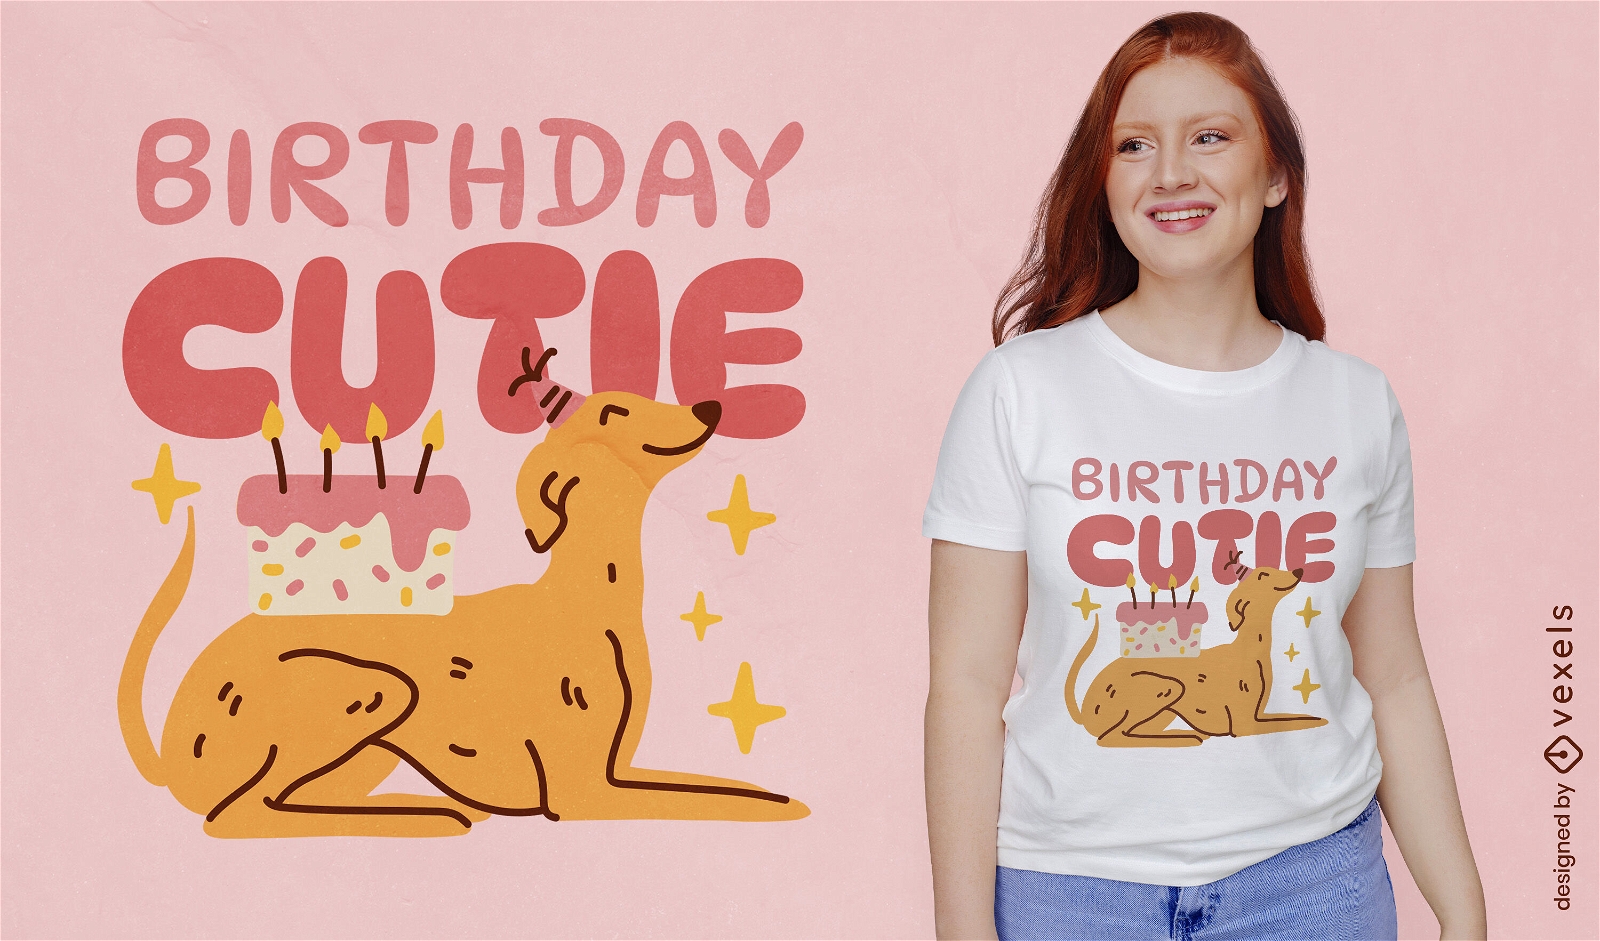 Birthday cutie dog t-shirt design